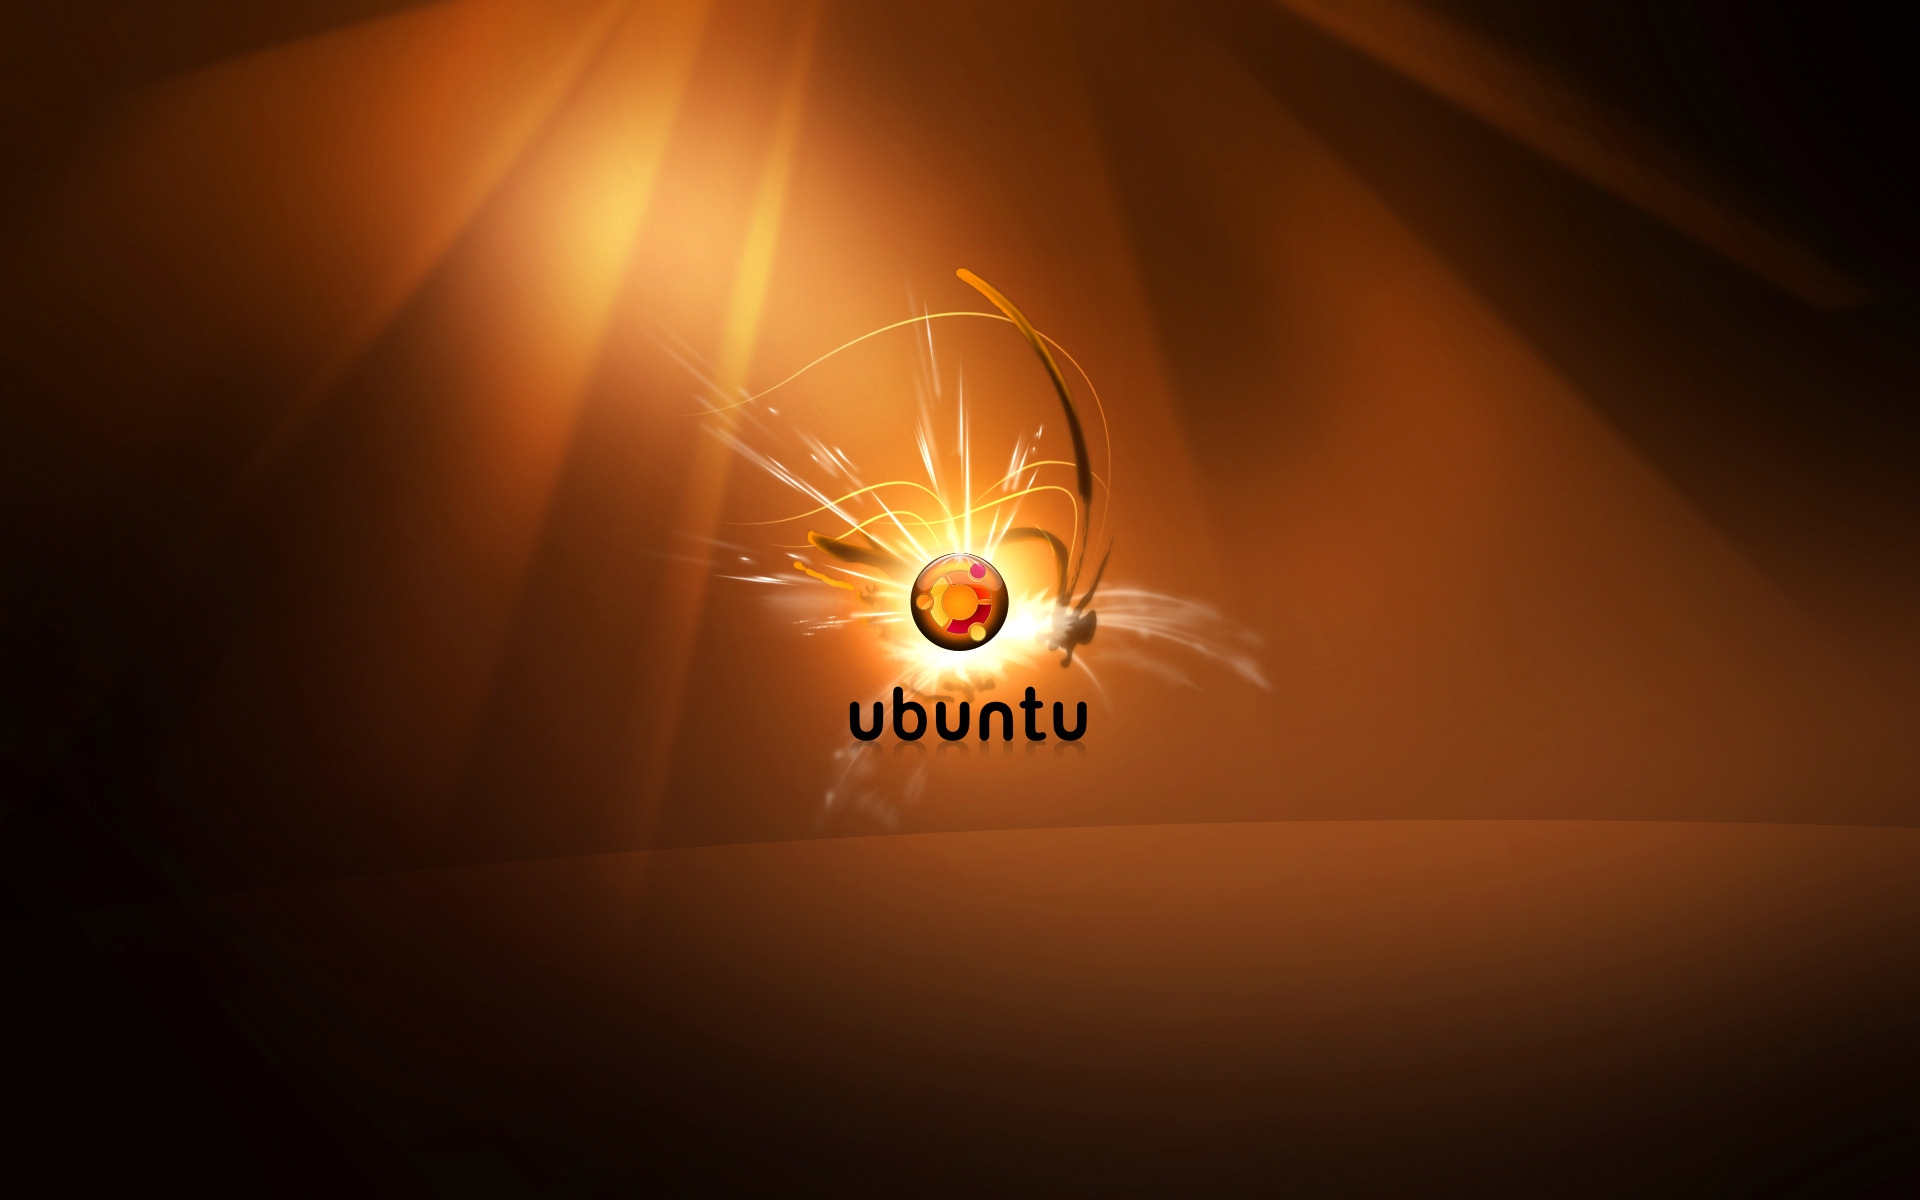 Creative Ubuntu Design for 1920 x 1200 widescreen resolution